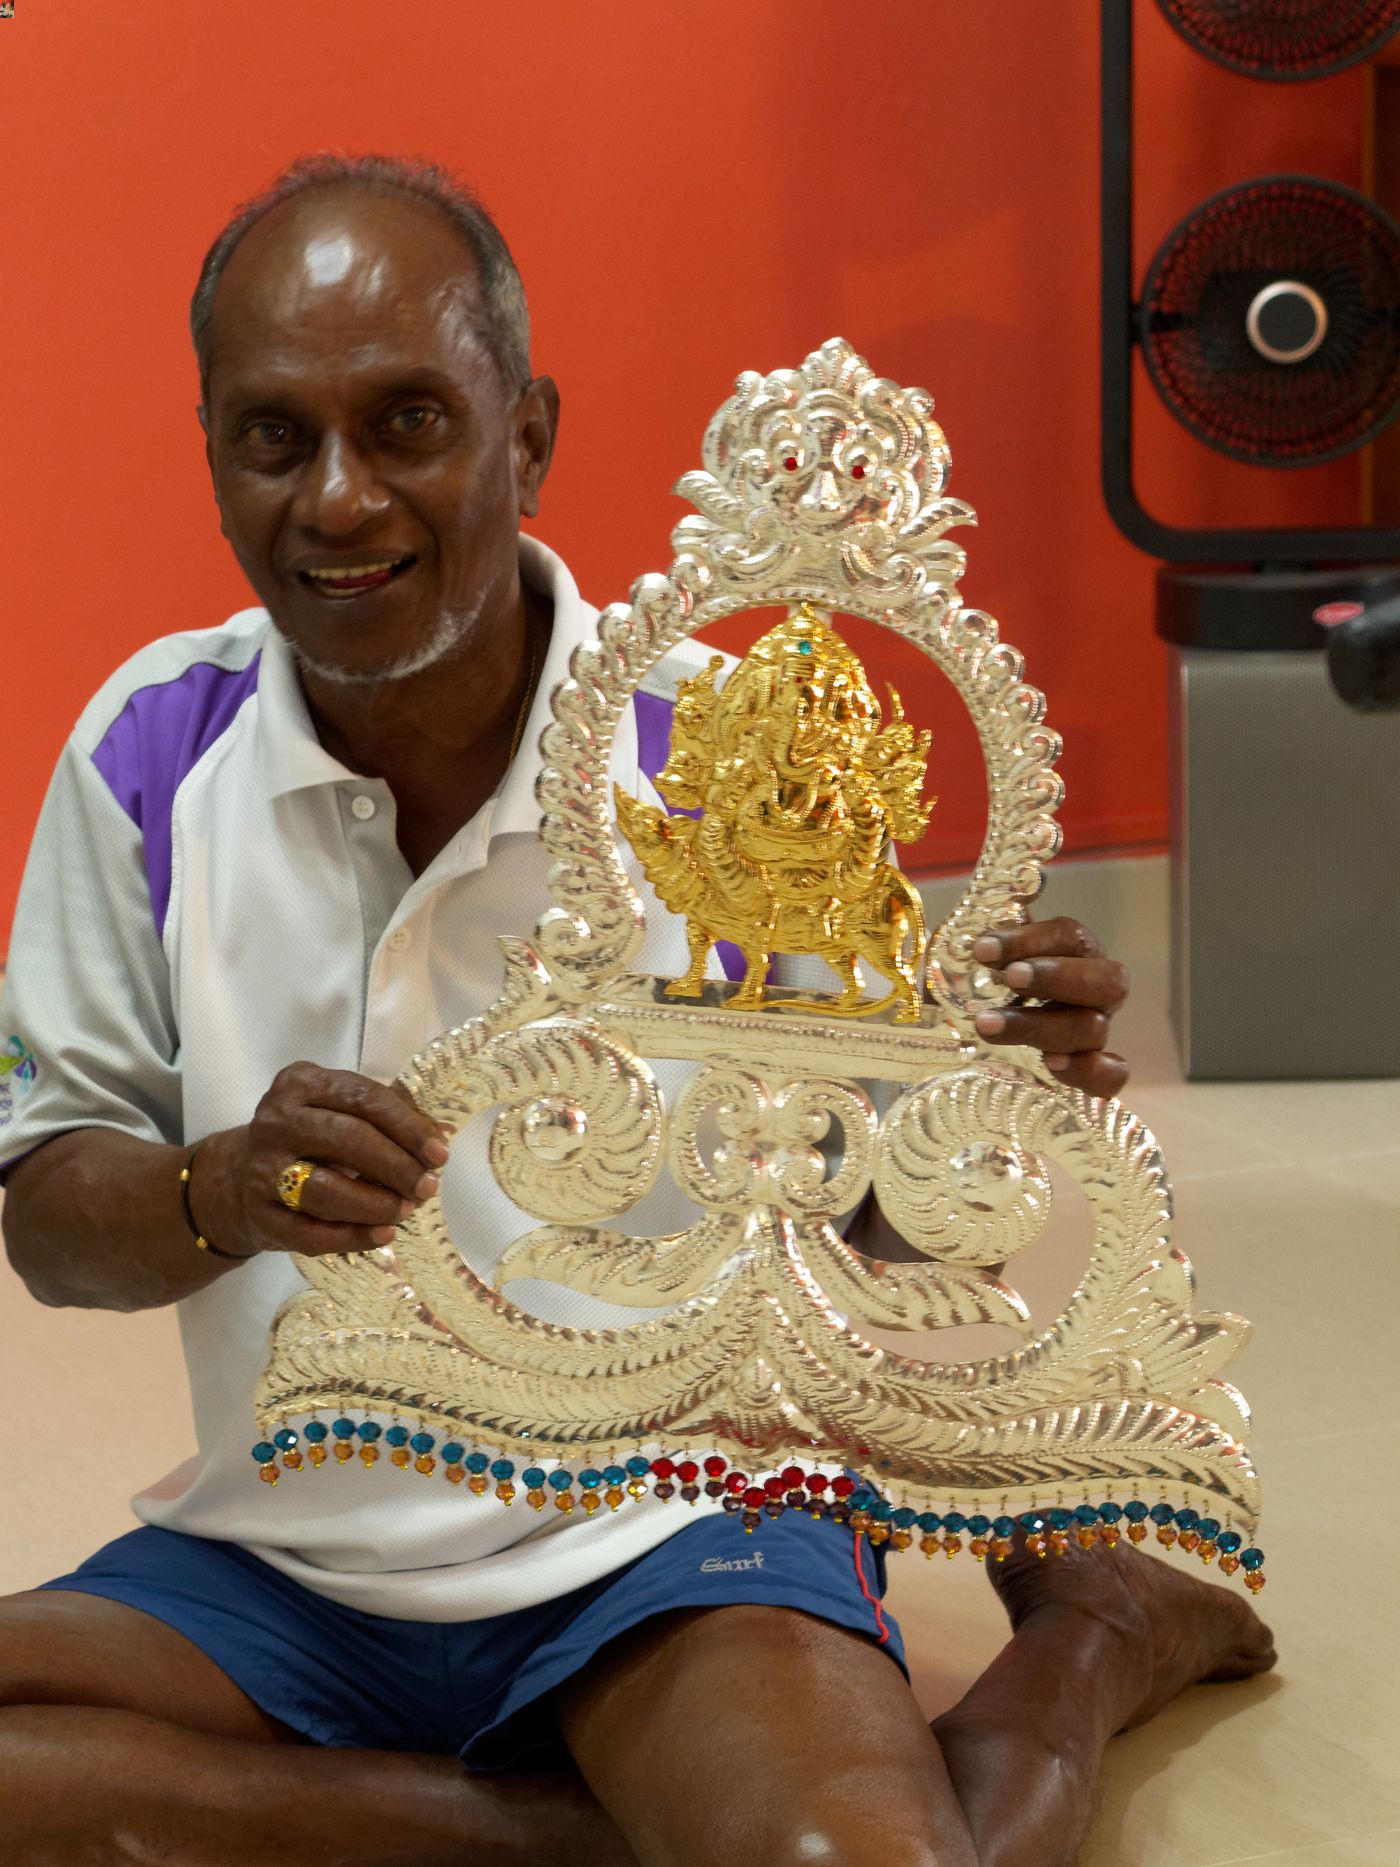 Mr Balakrishnan s/o Sadasivam, who is a kavadi maker, shows a metal decorative element bearing the image of Hindu god Ganesha that is to be attached to a kavadi.